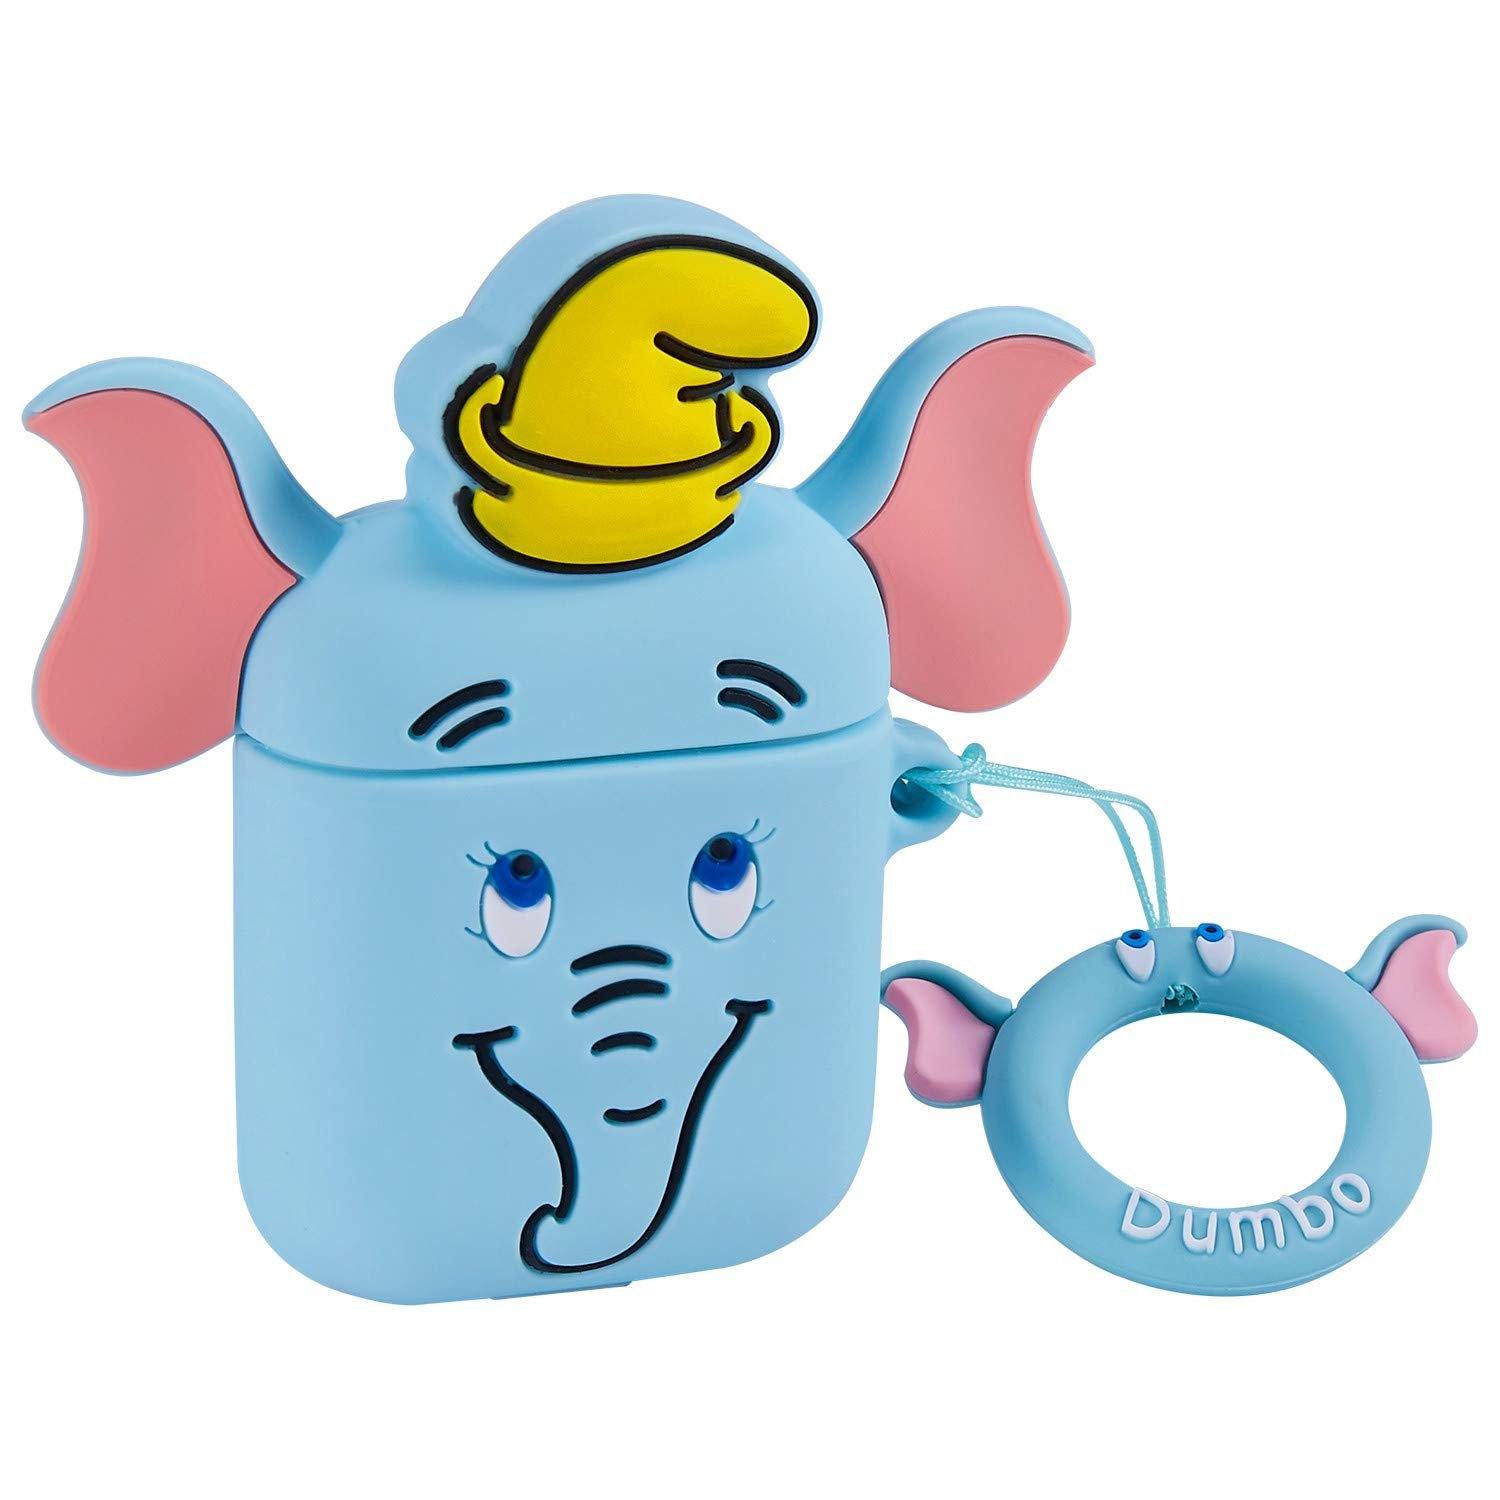 Dumbo Apple Airpods Case - Lottemi